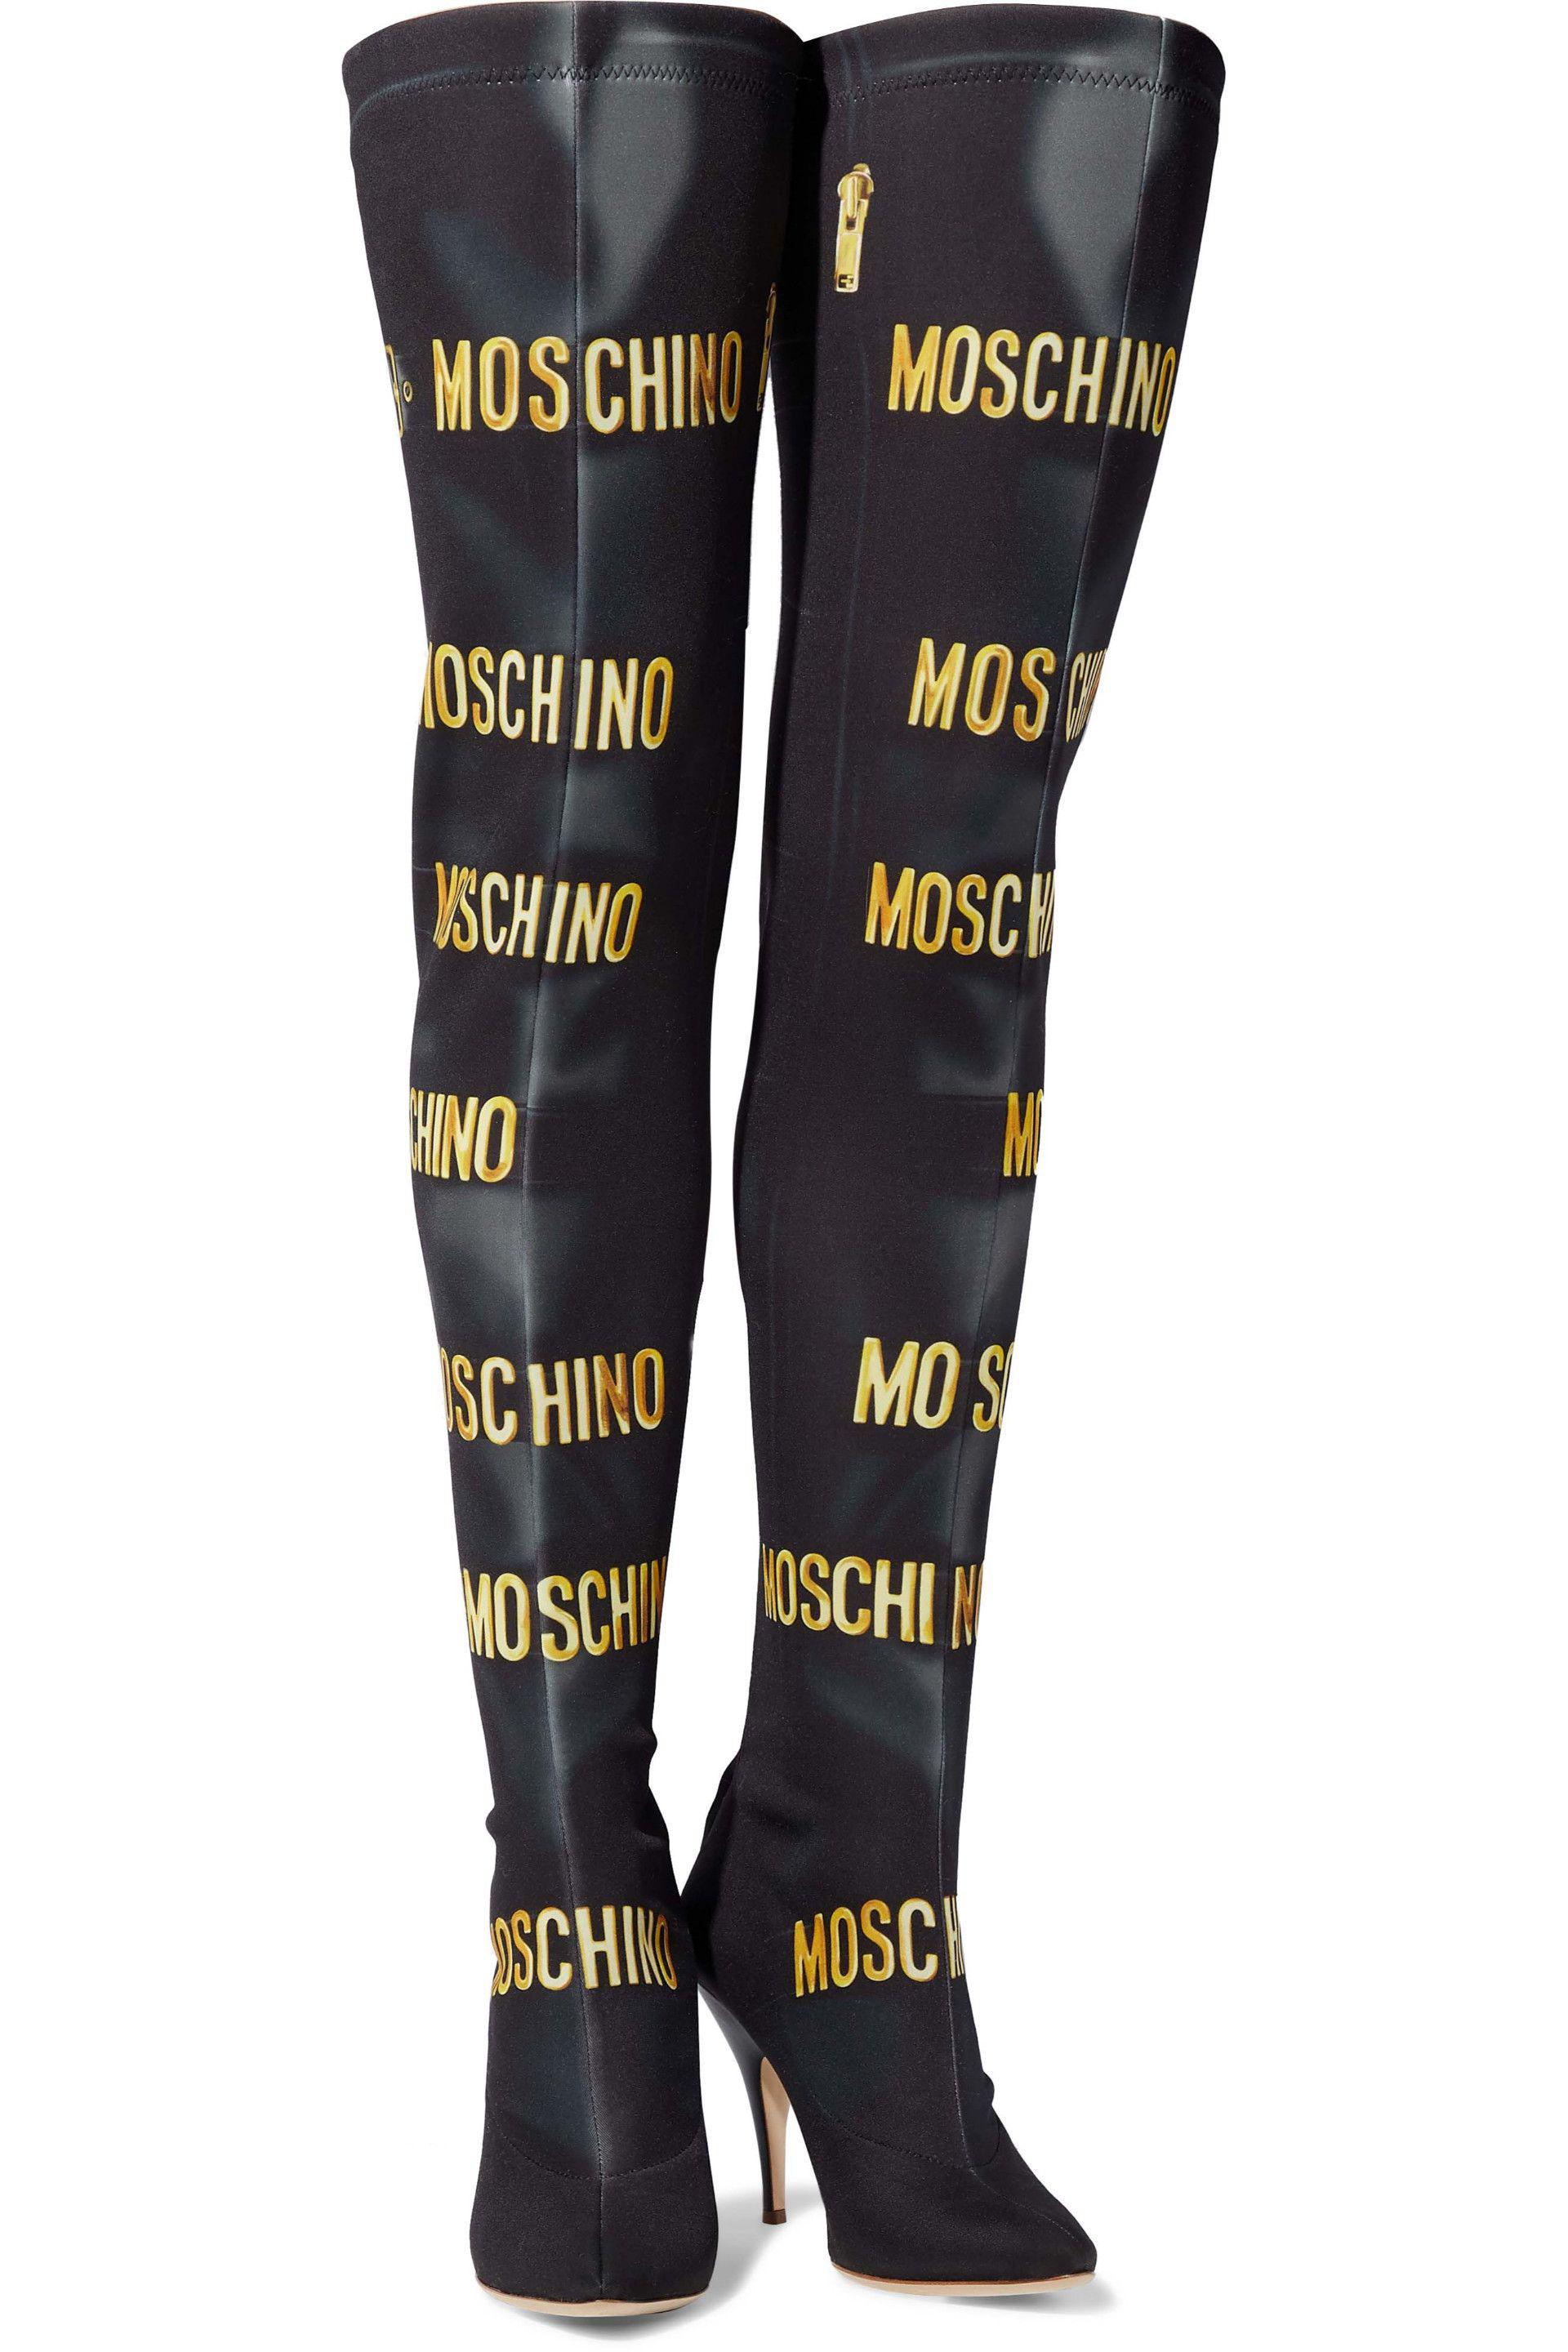 moschino thigh high boots